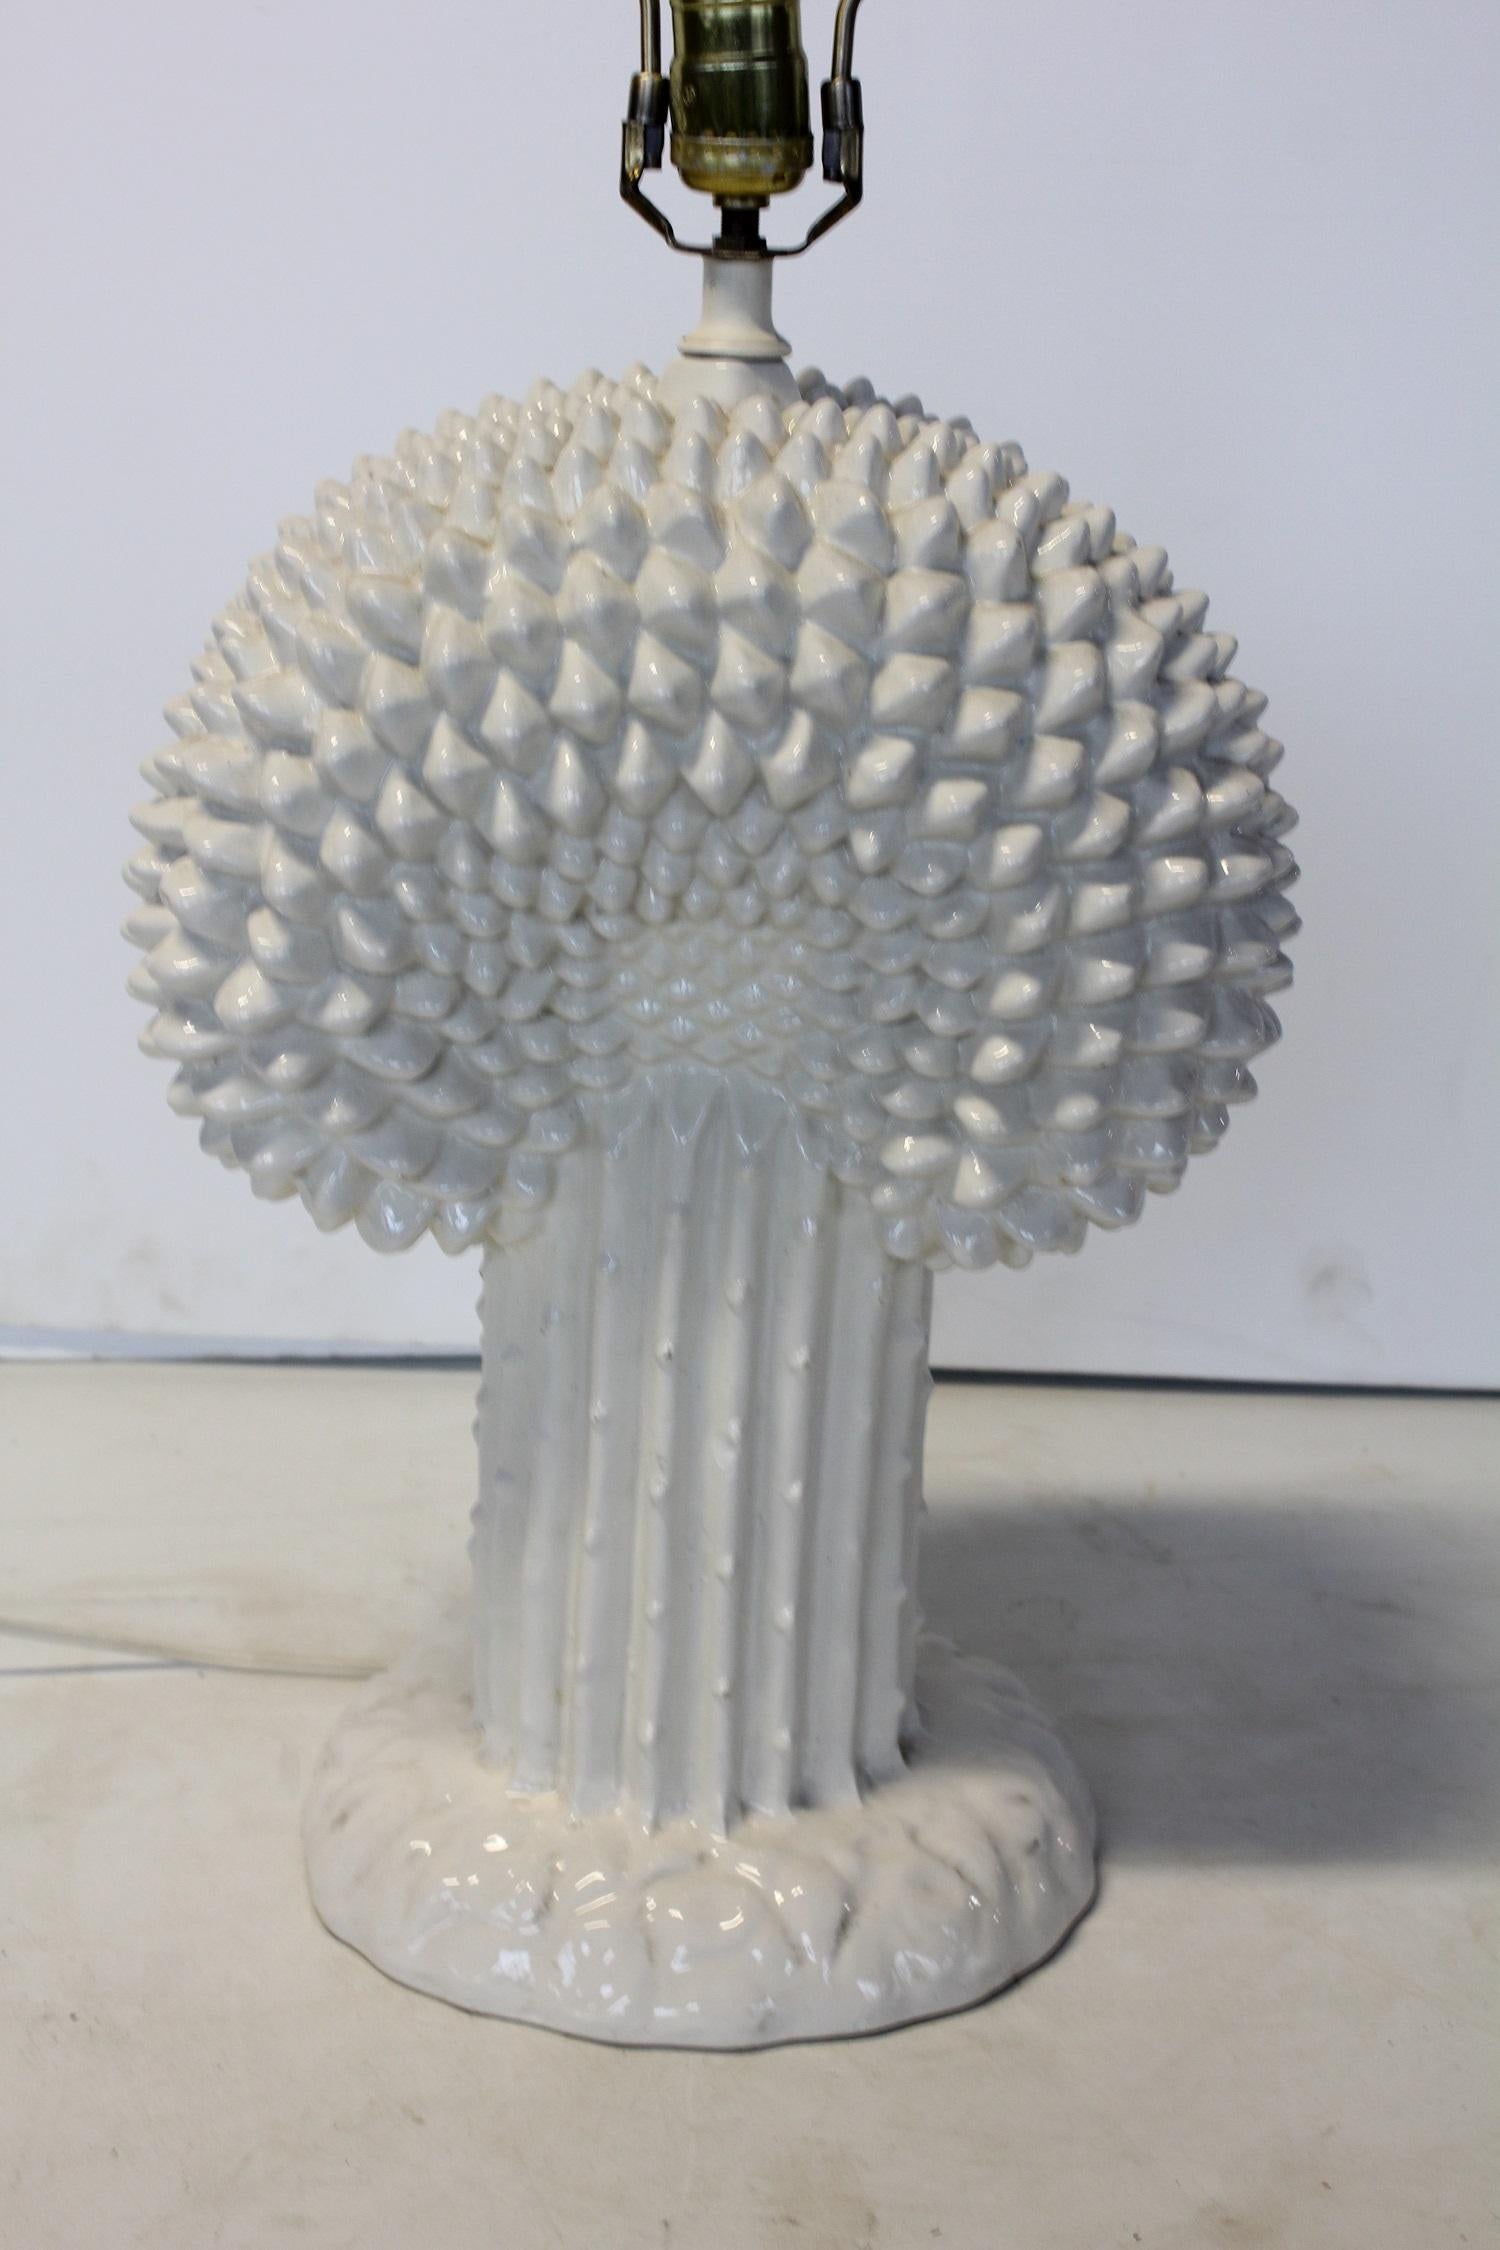 Midcentury Italian sculptural ceramic table lamp. Measures: H with harp 30